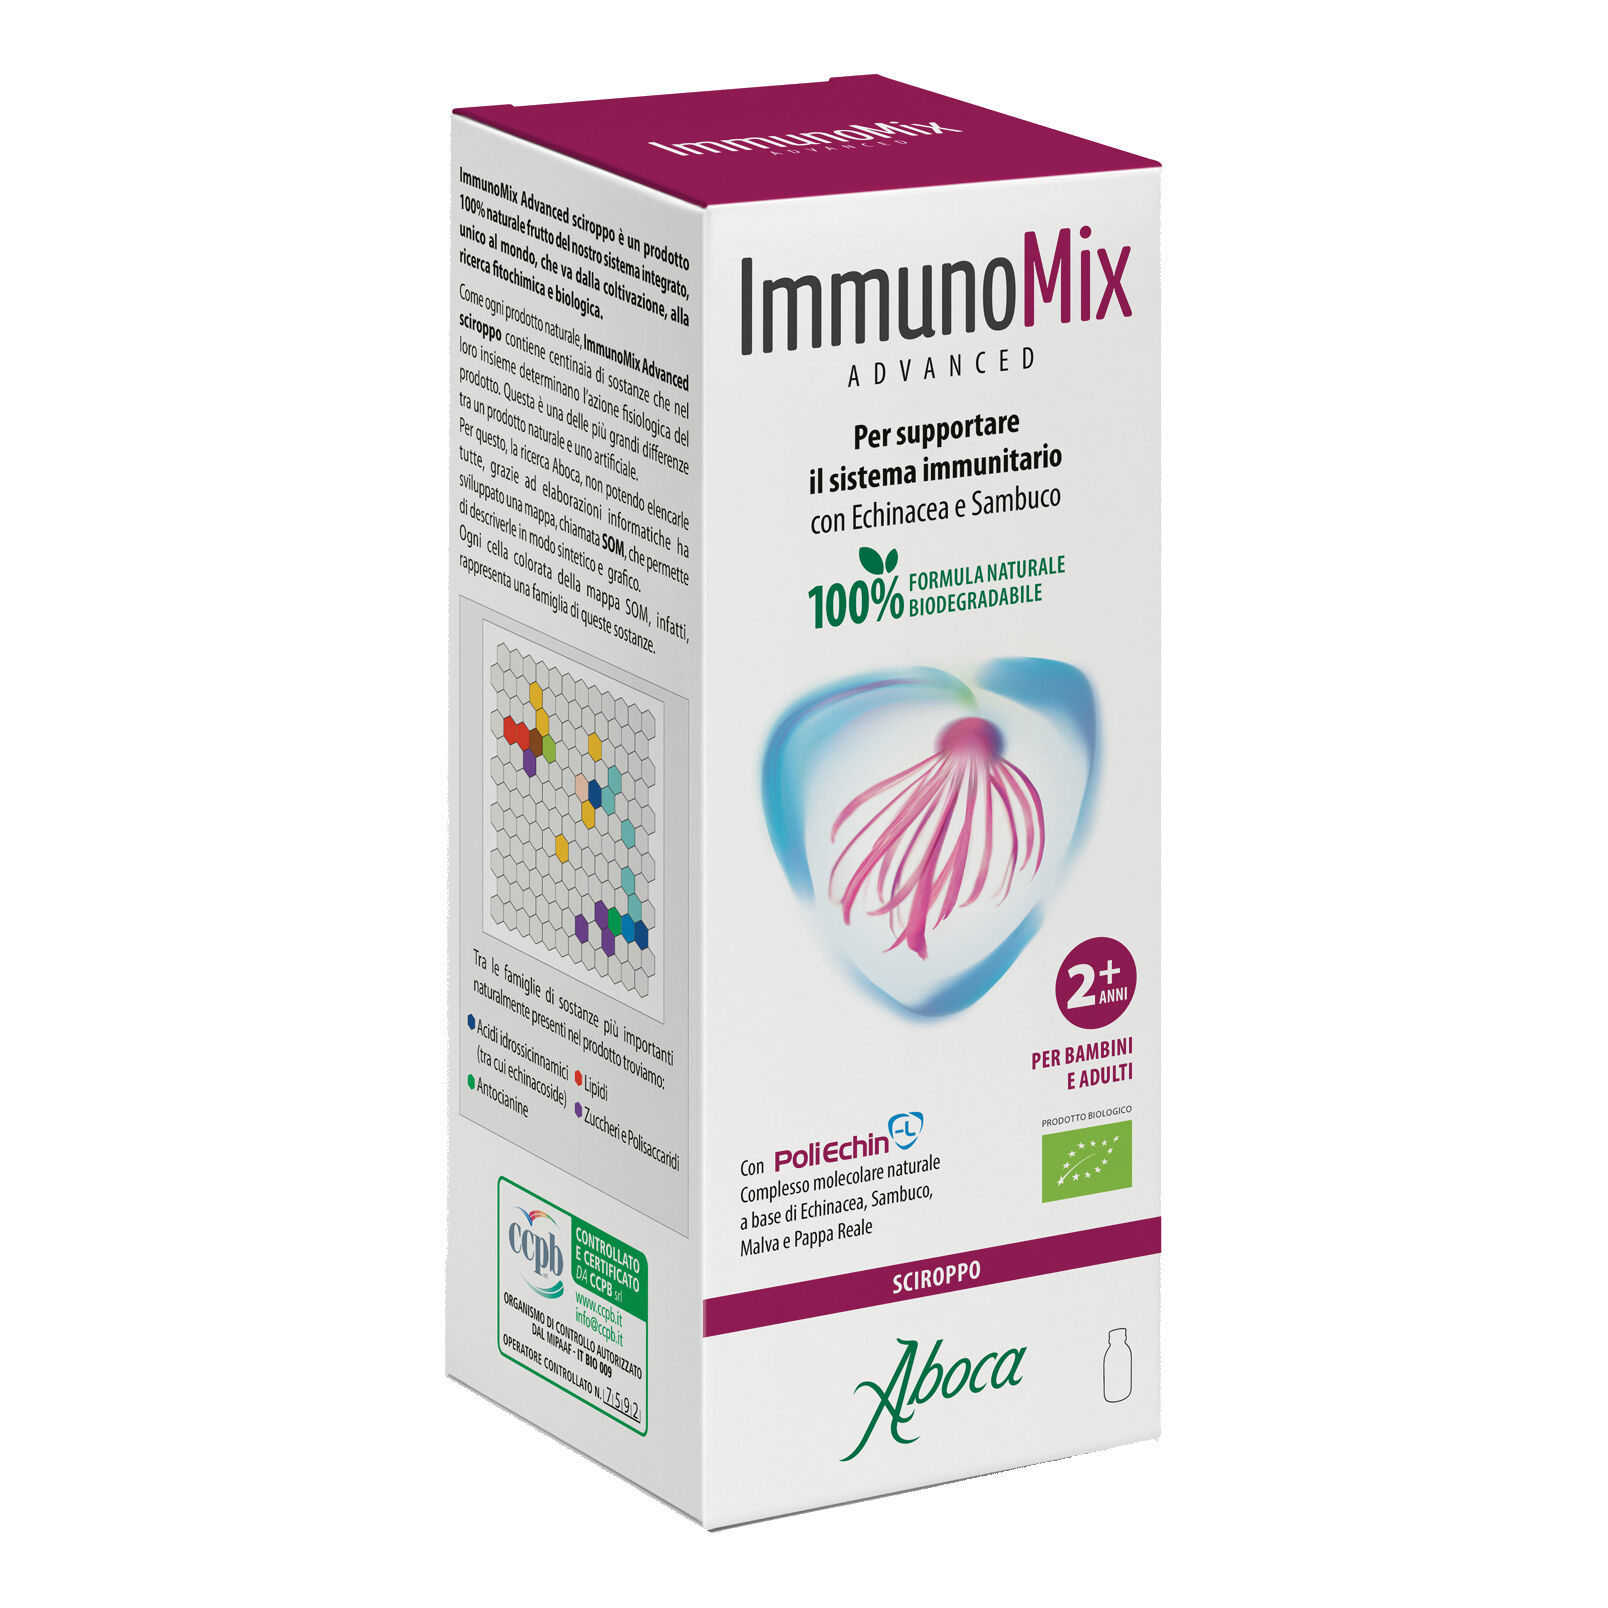 ABOCA Immunomix advanced sciroppo 210 g